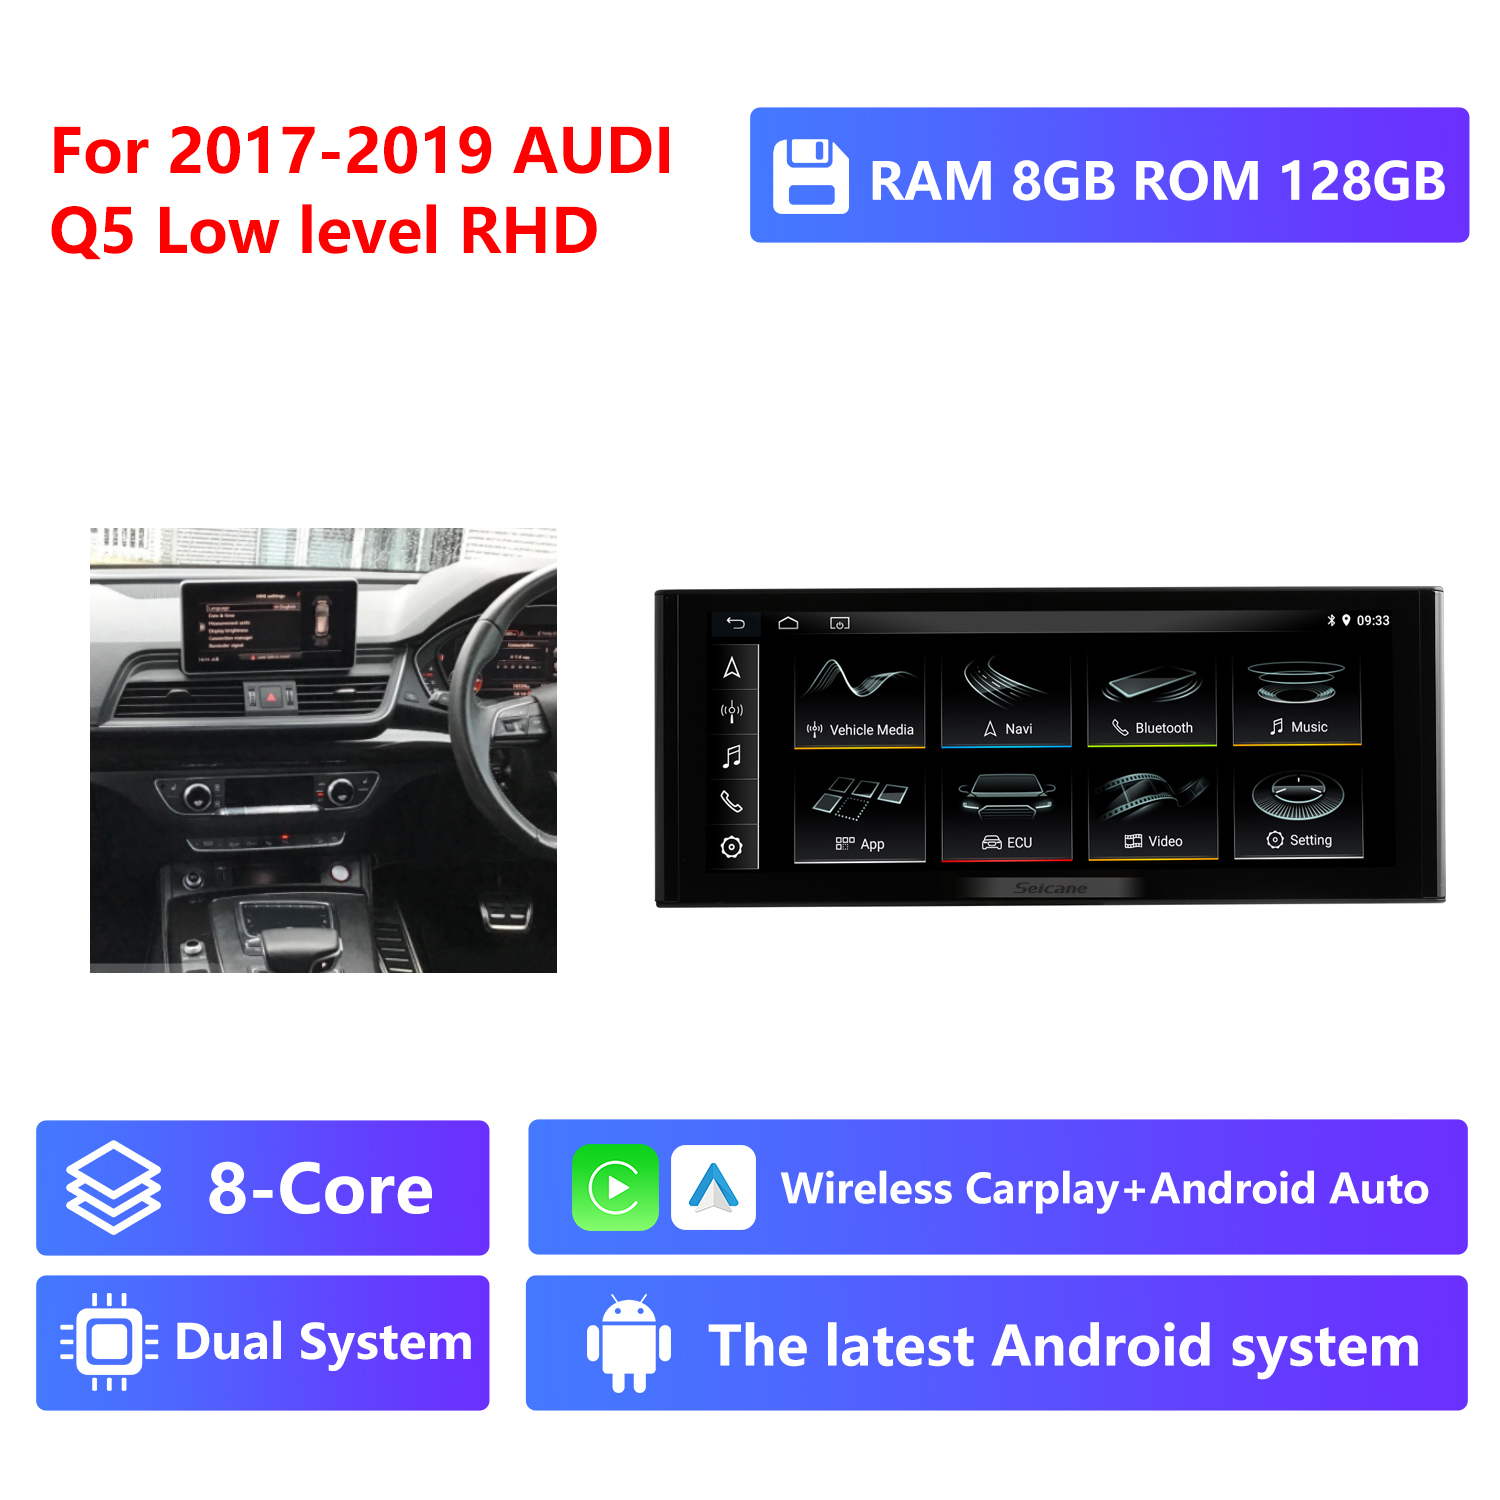 8-Core RAM 8G ROM 128G,2017-2019,Low version,RHD